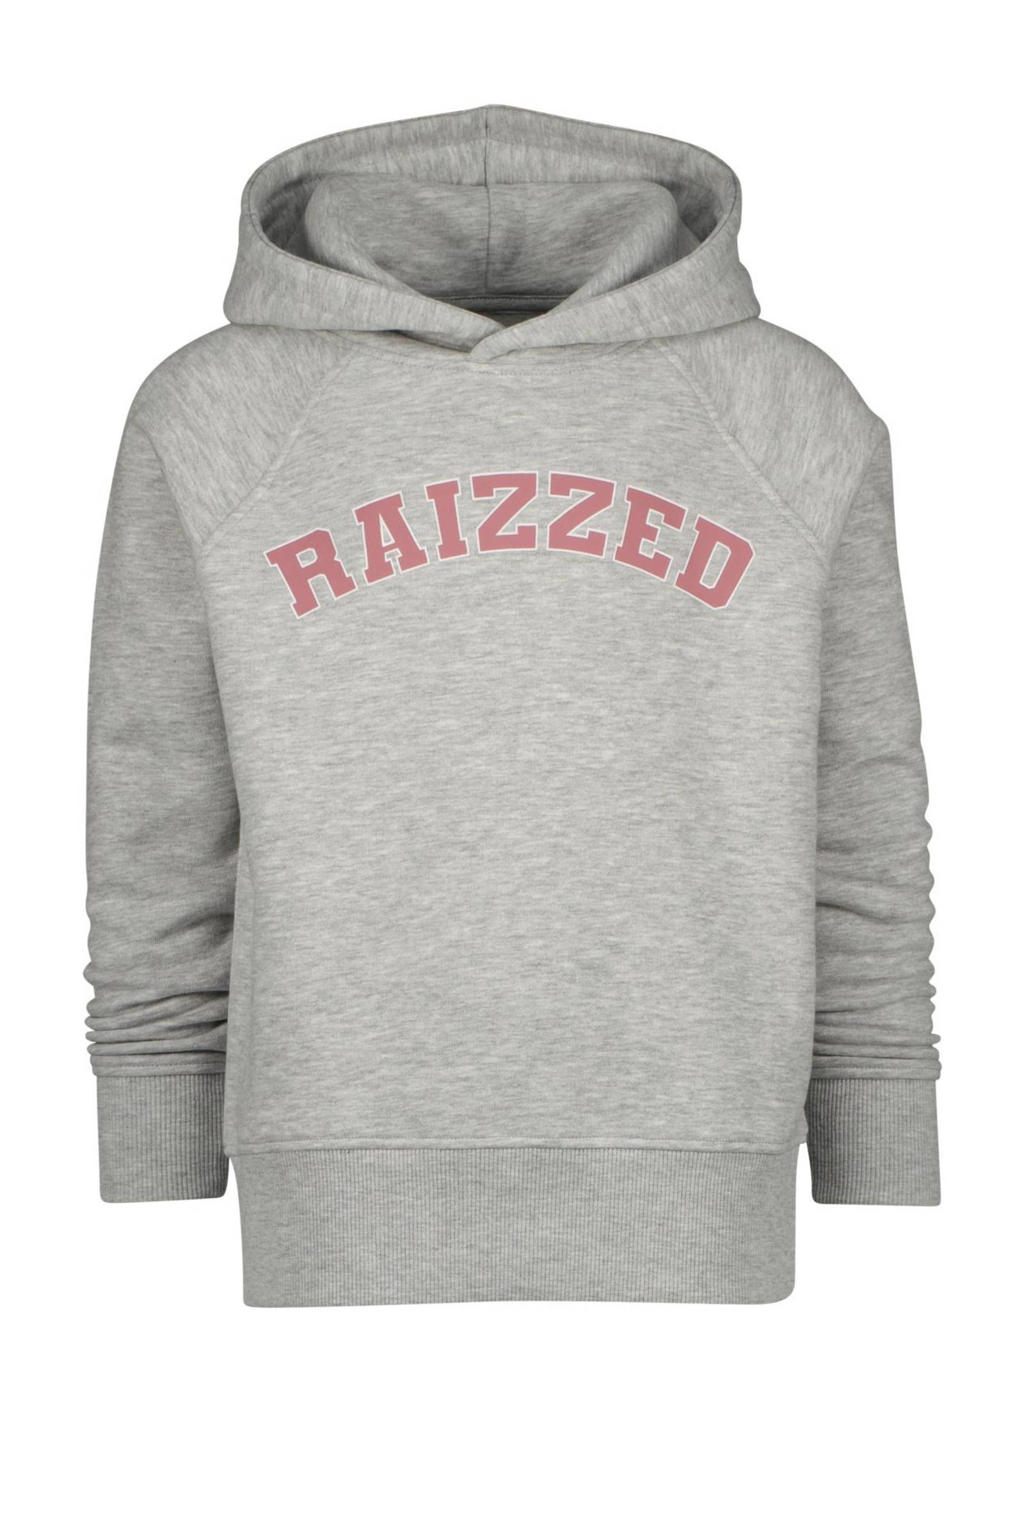 Raizzed hoodie Charlotte met logo lichtgrijs melange